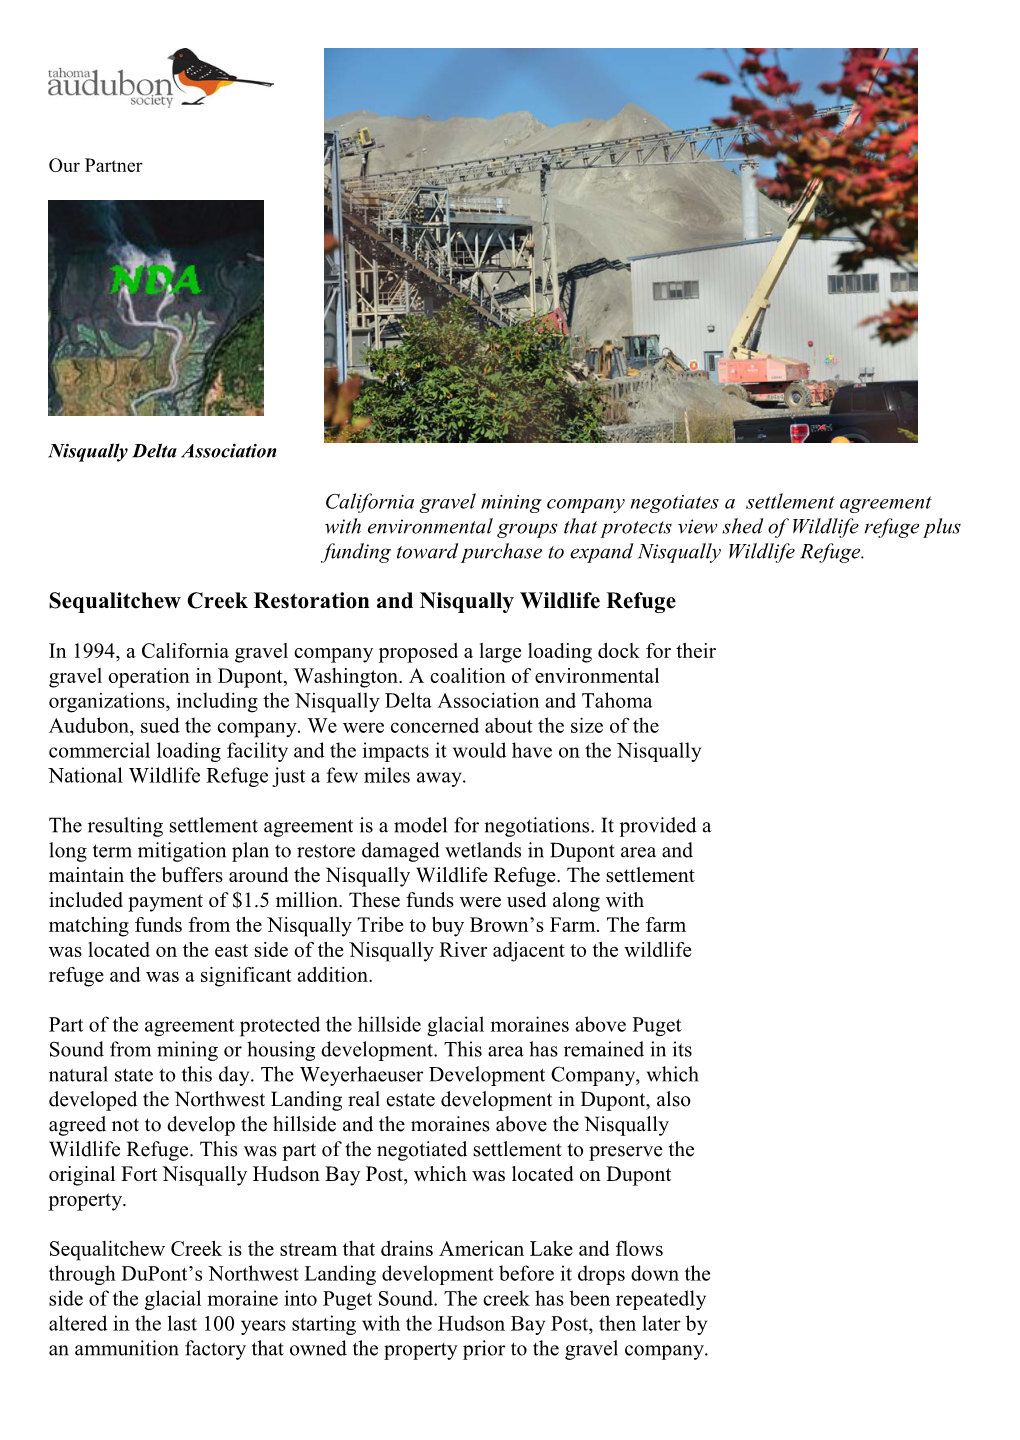 Sequalitchew Creek Restoration and Nisqually Wildlife Refuge